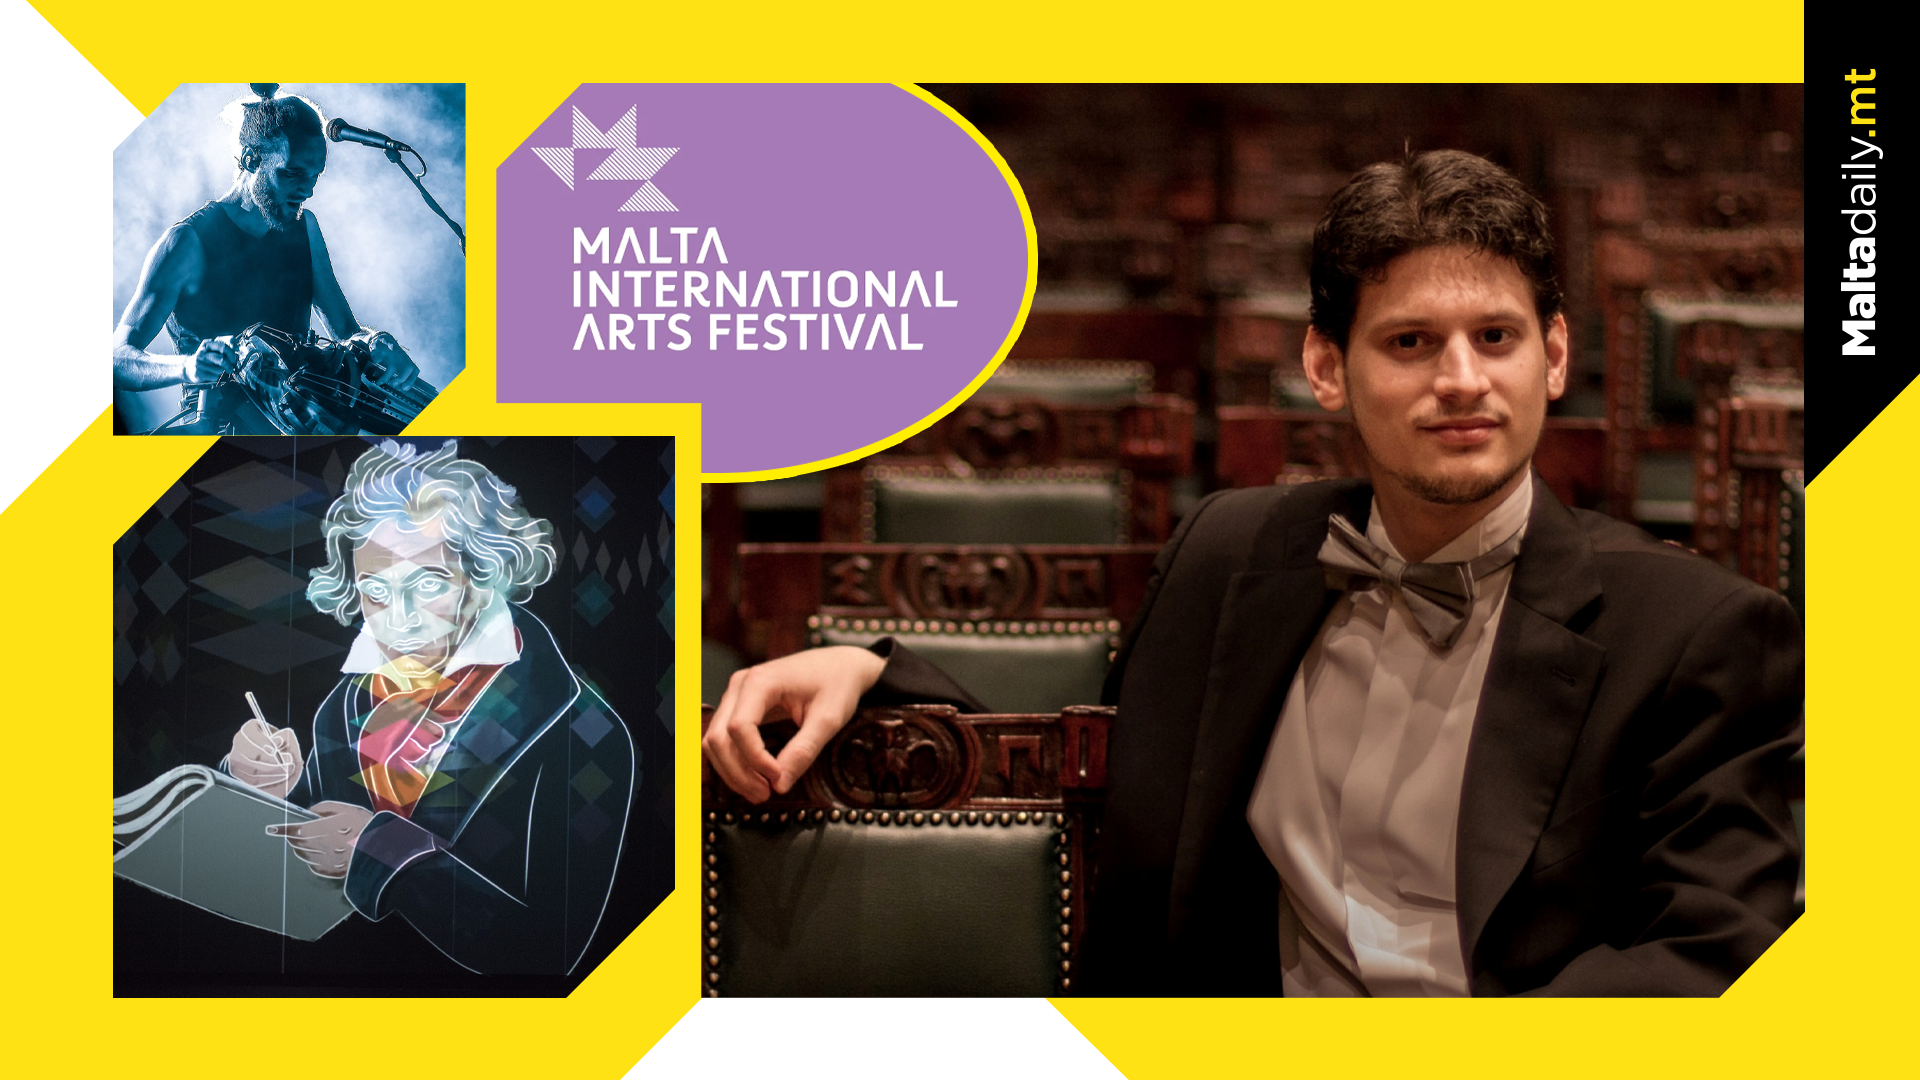 The Malta International Arts Festival is just one week away!